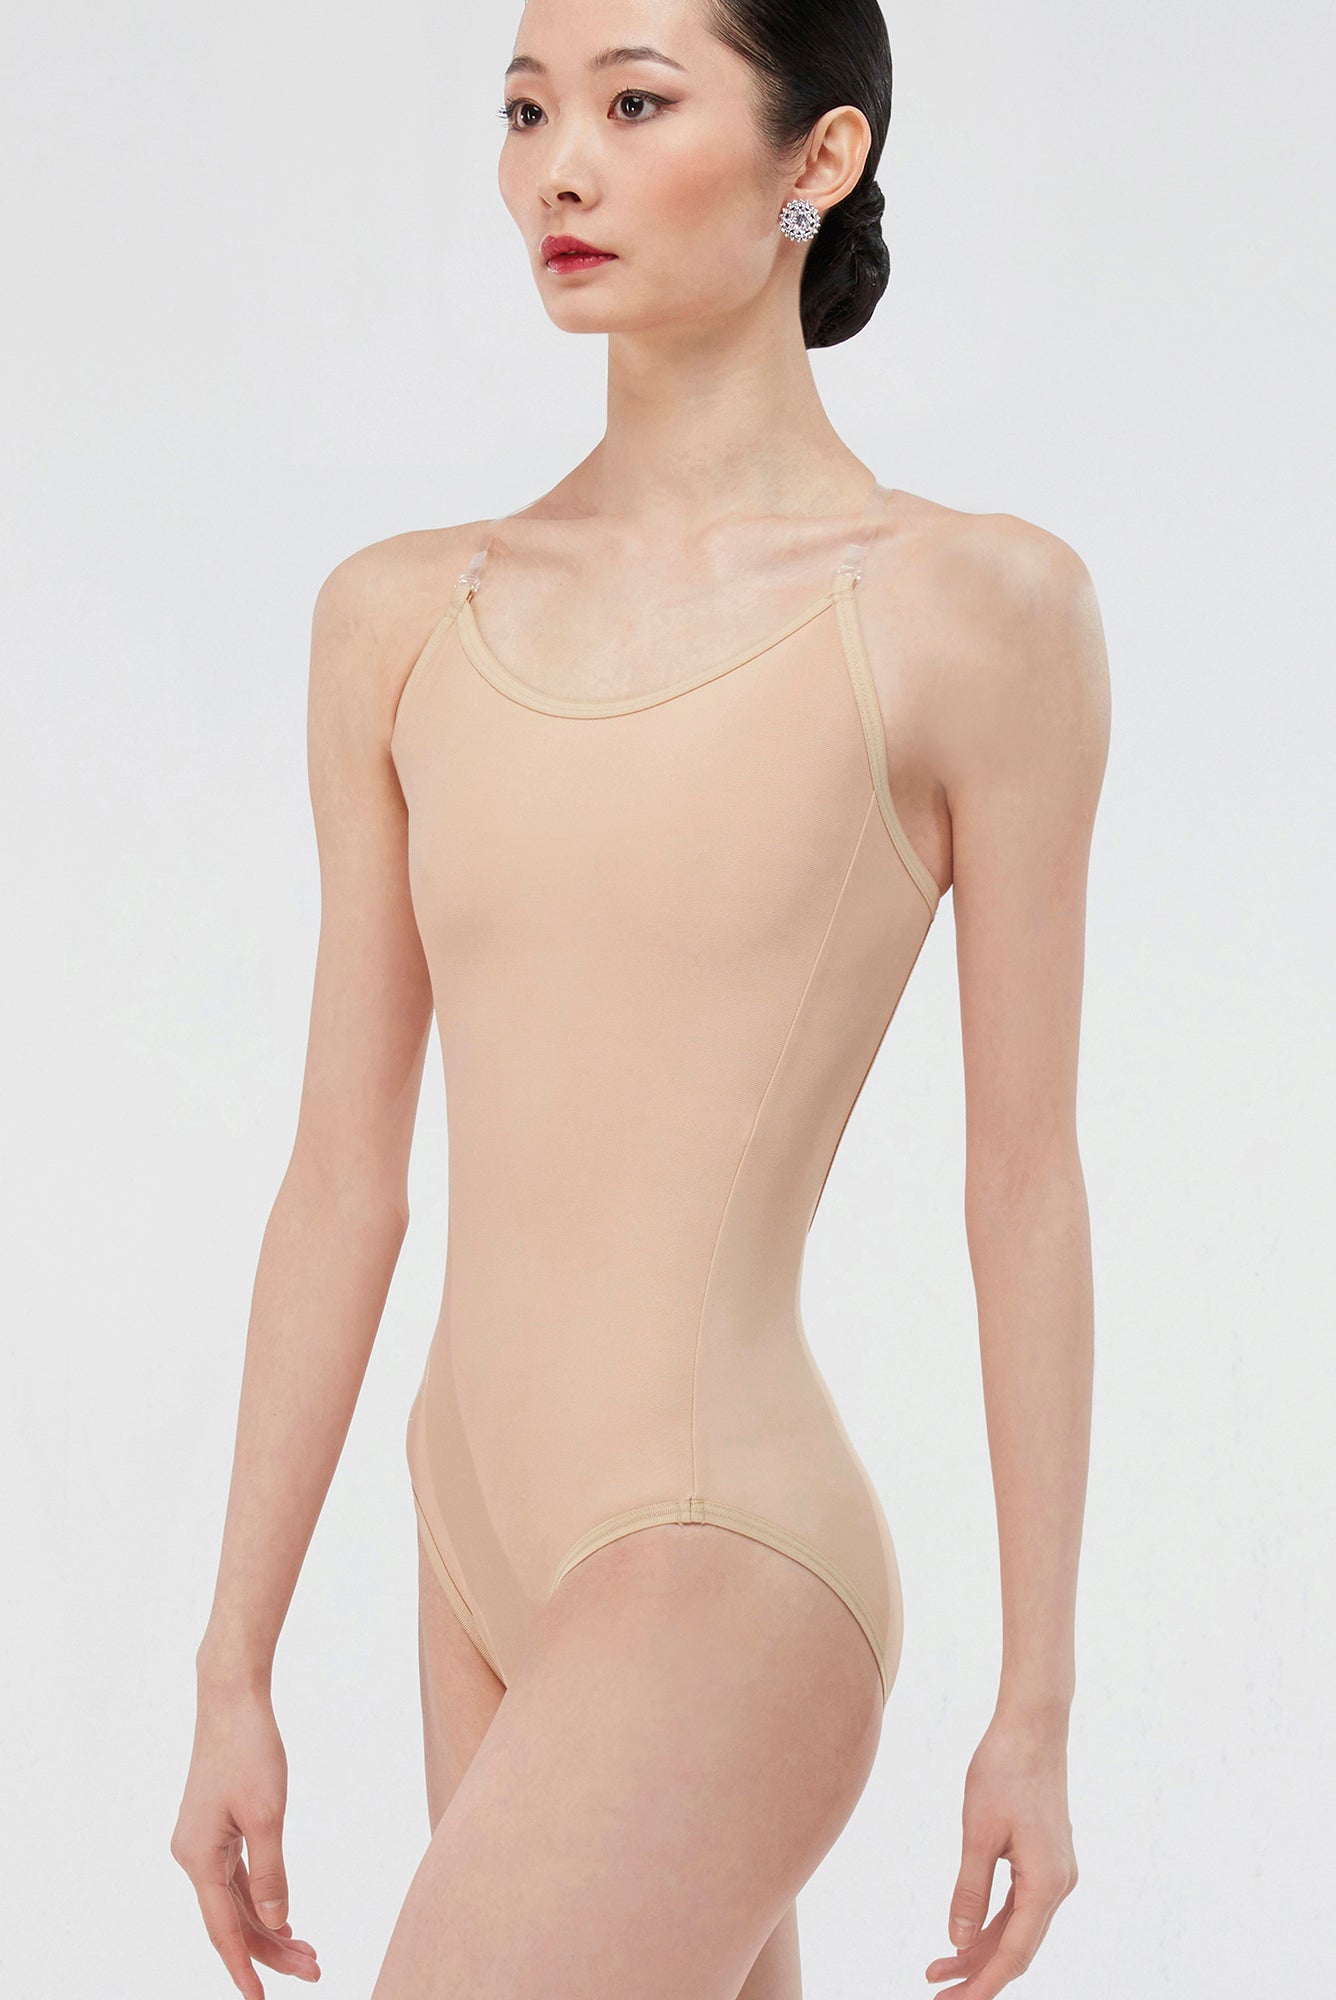 Girls' Dance Underwear Training Sports Performance Under Clothes Invisible  Under Bodysuit Nude Seamless Camisole One-piece